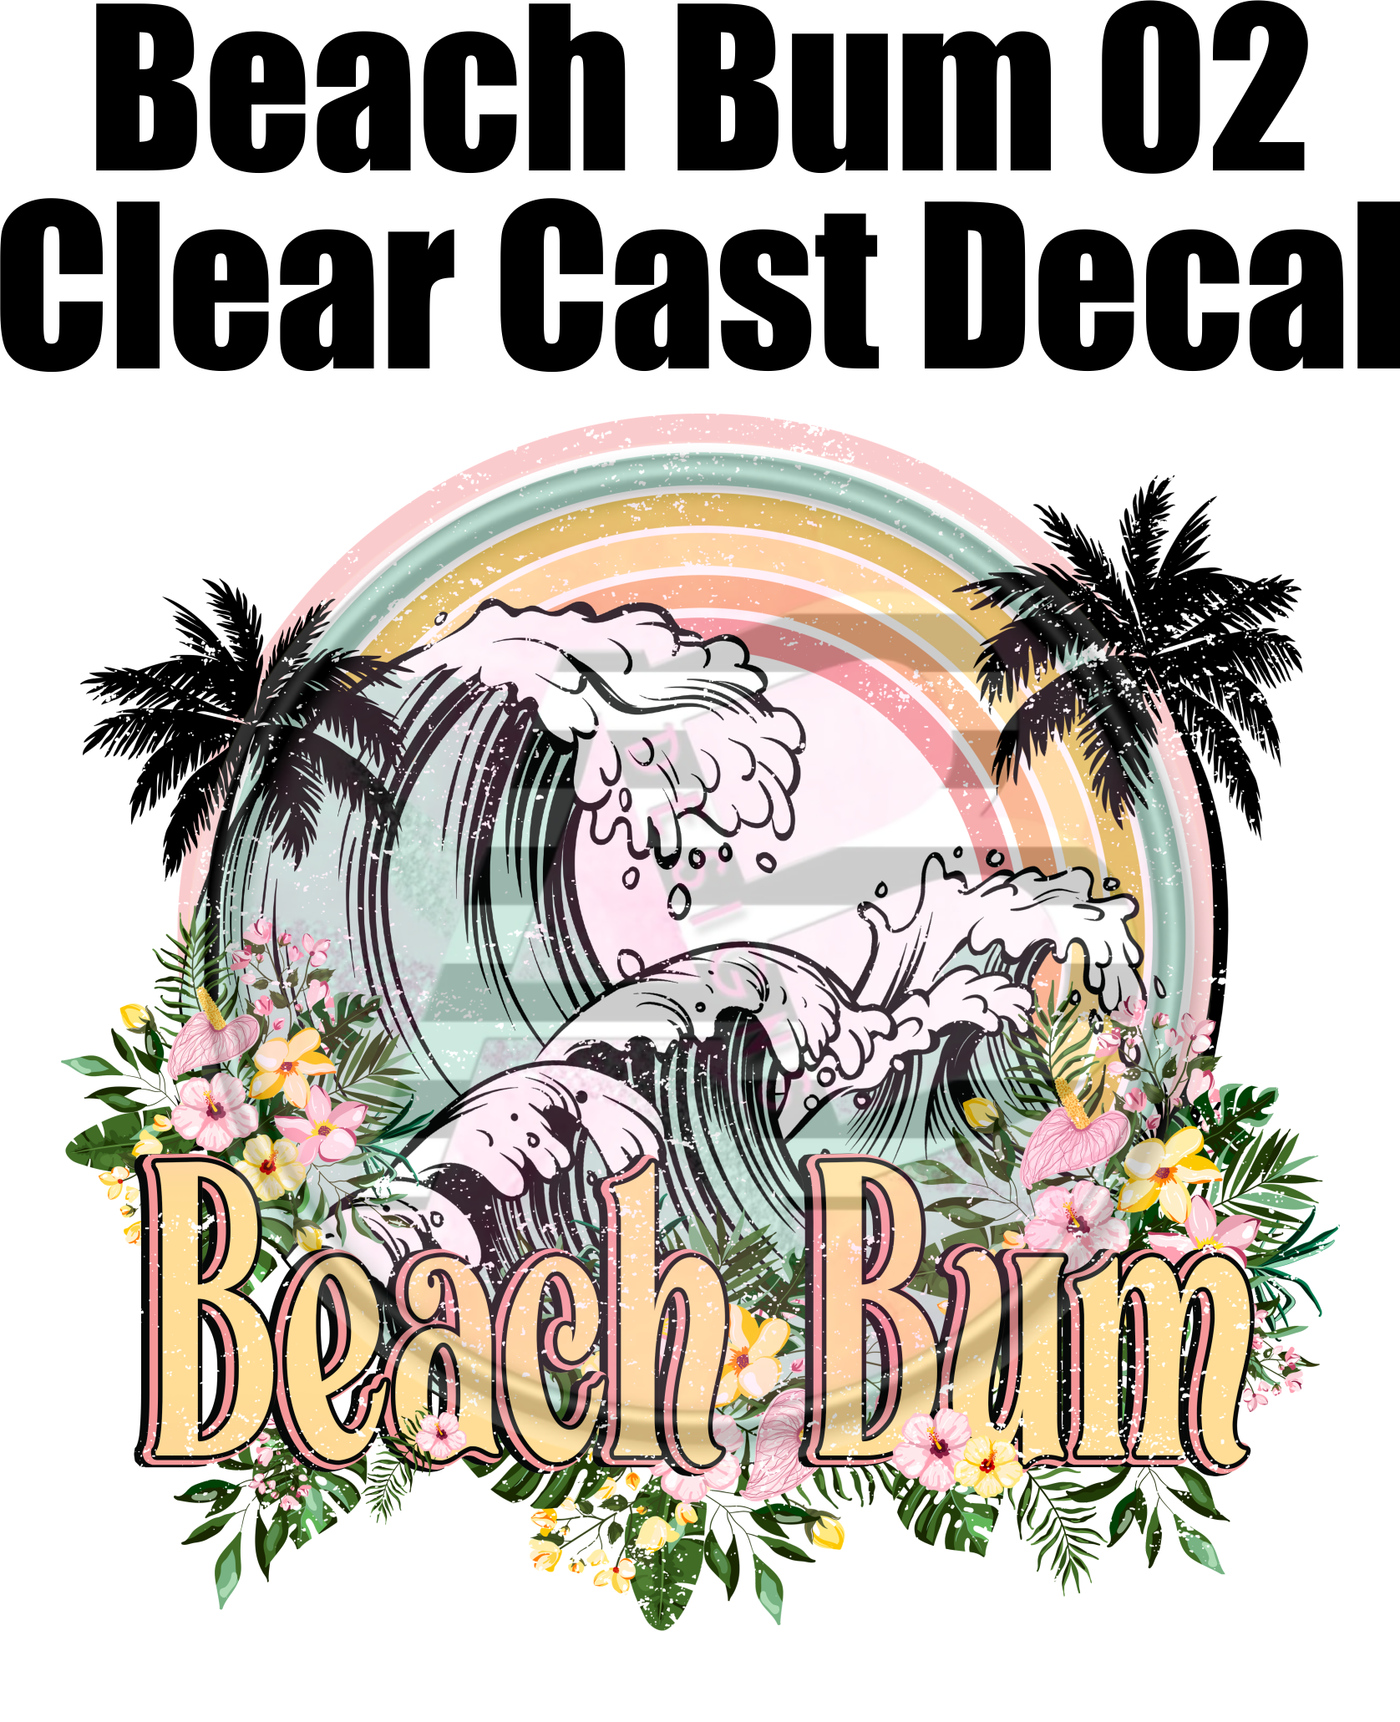 Beach Bum 02 - Clear Cast Decal